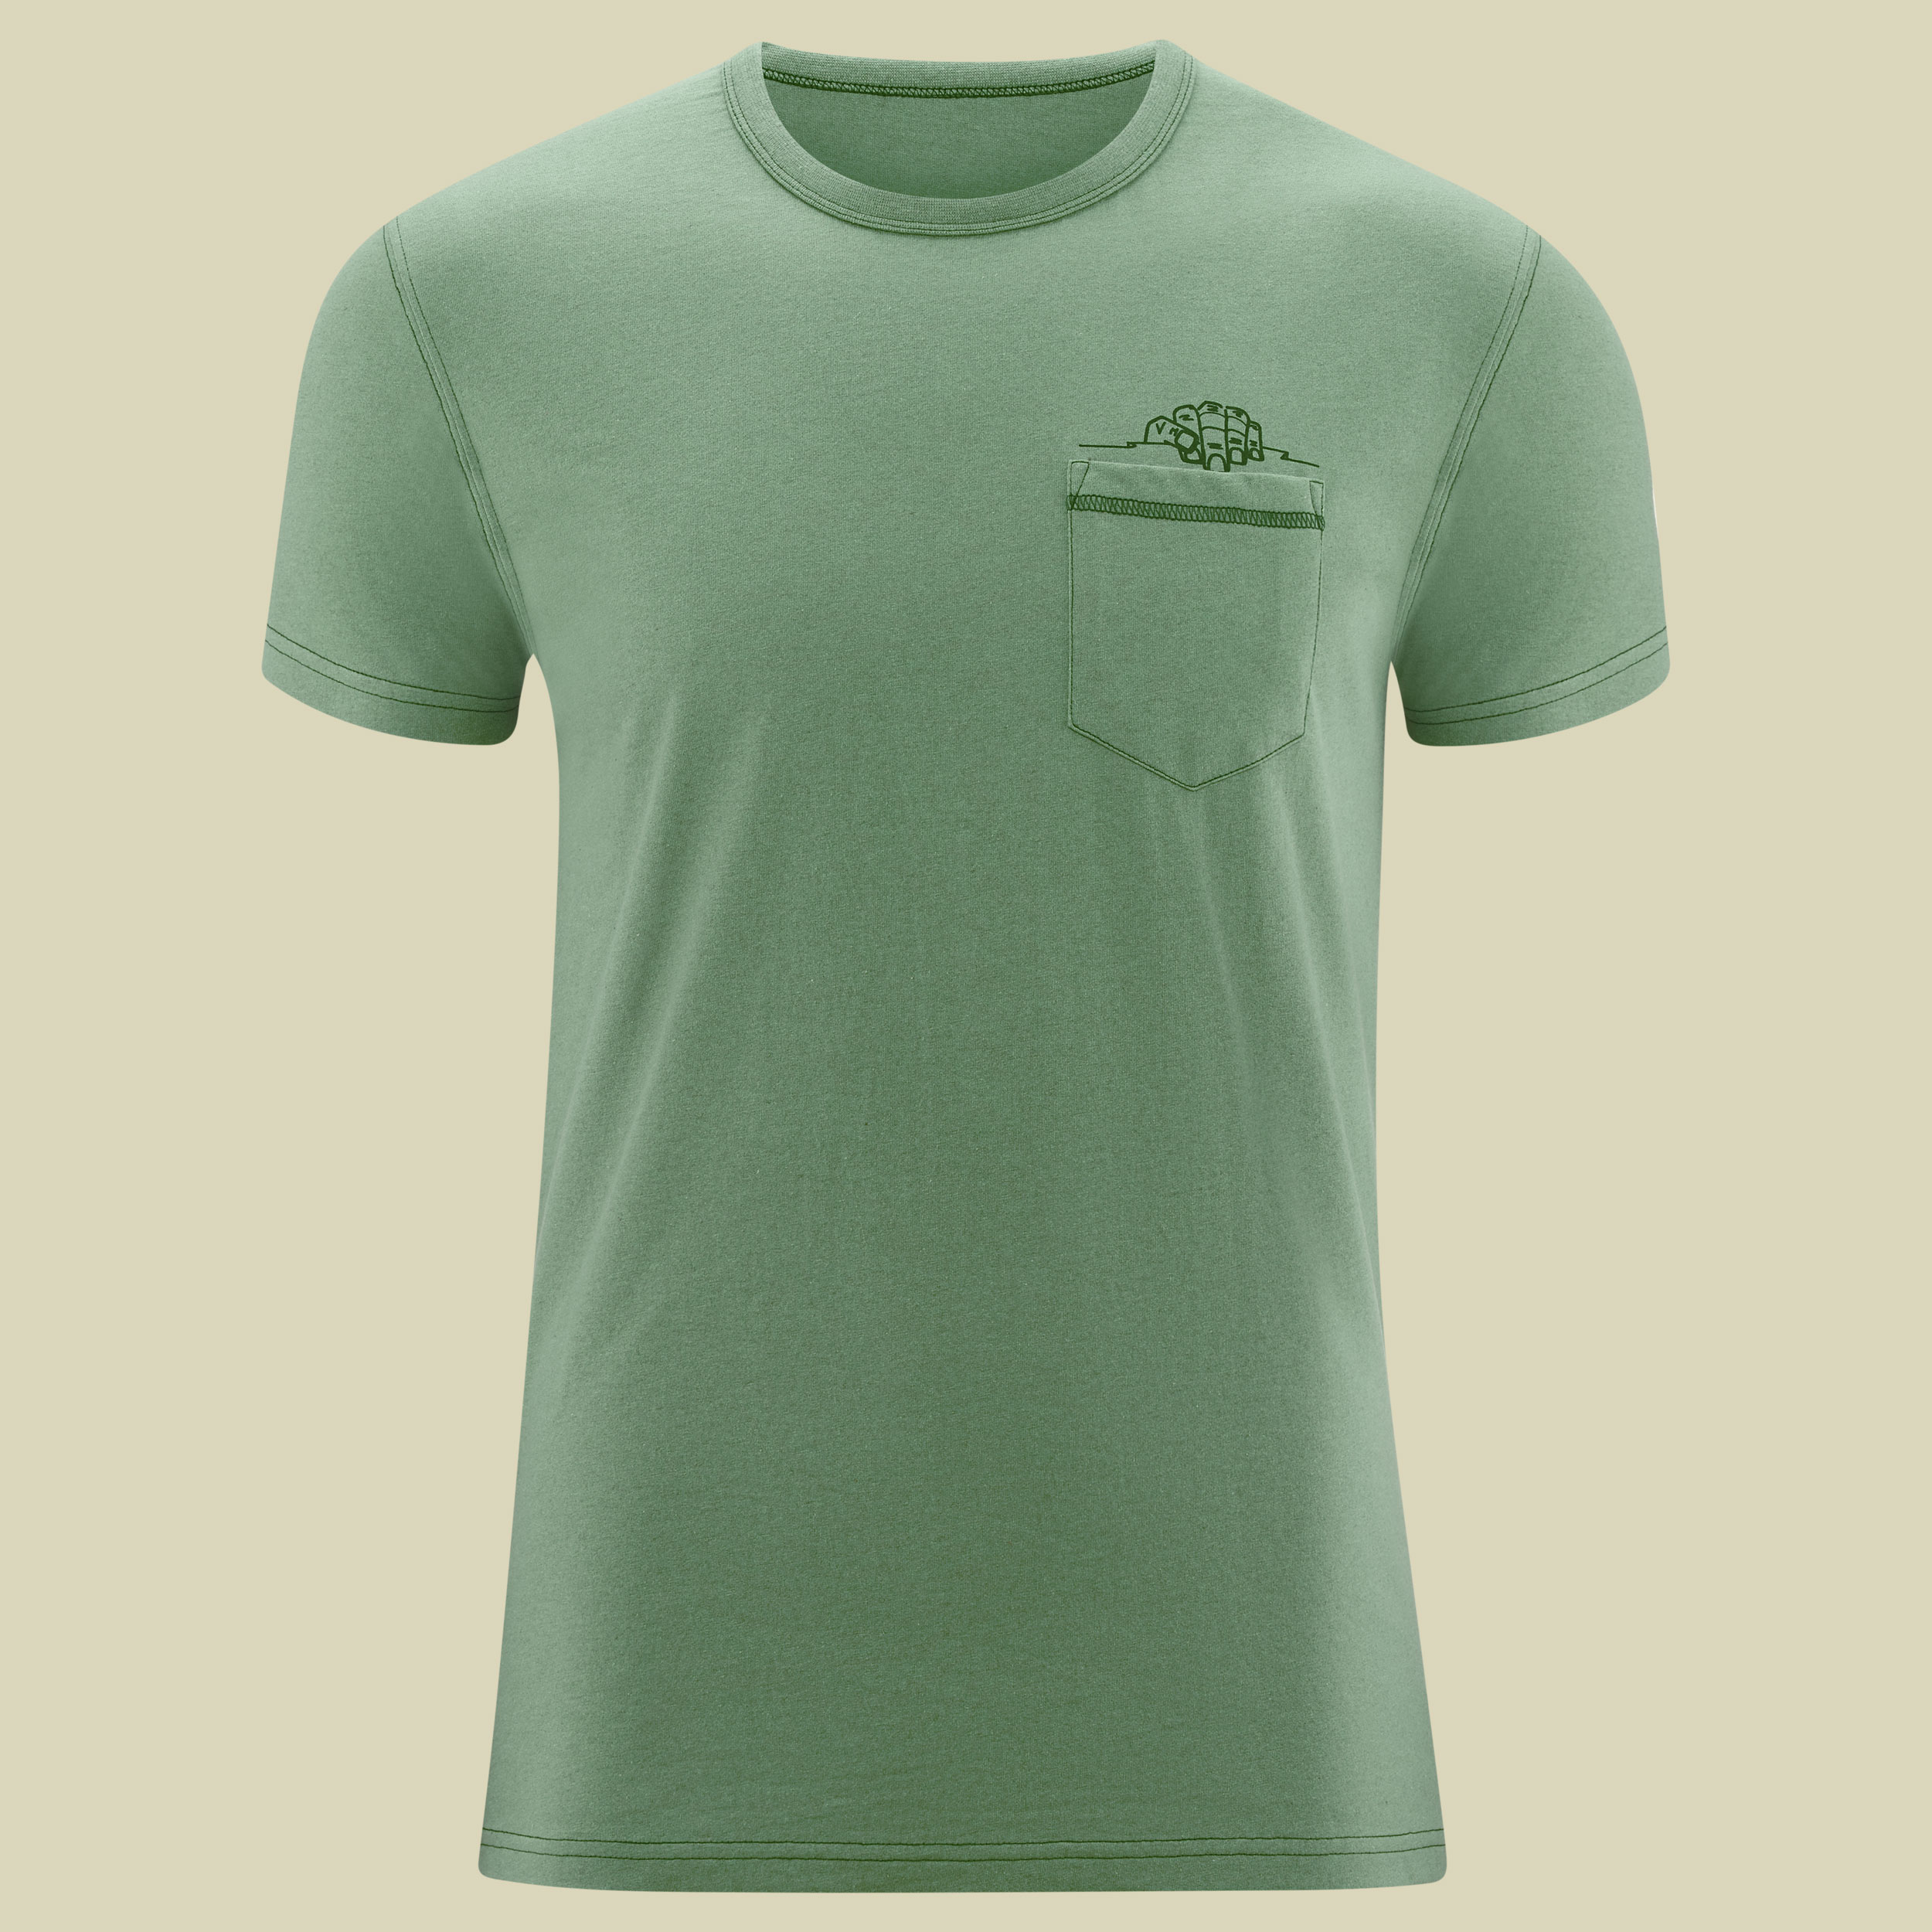 Heso T-Shirt III Men grün M - kale